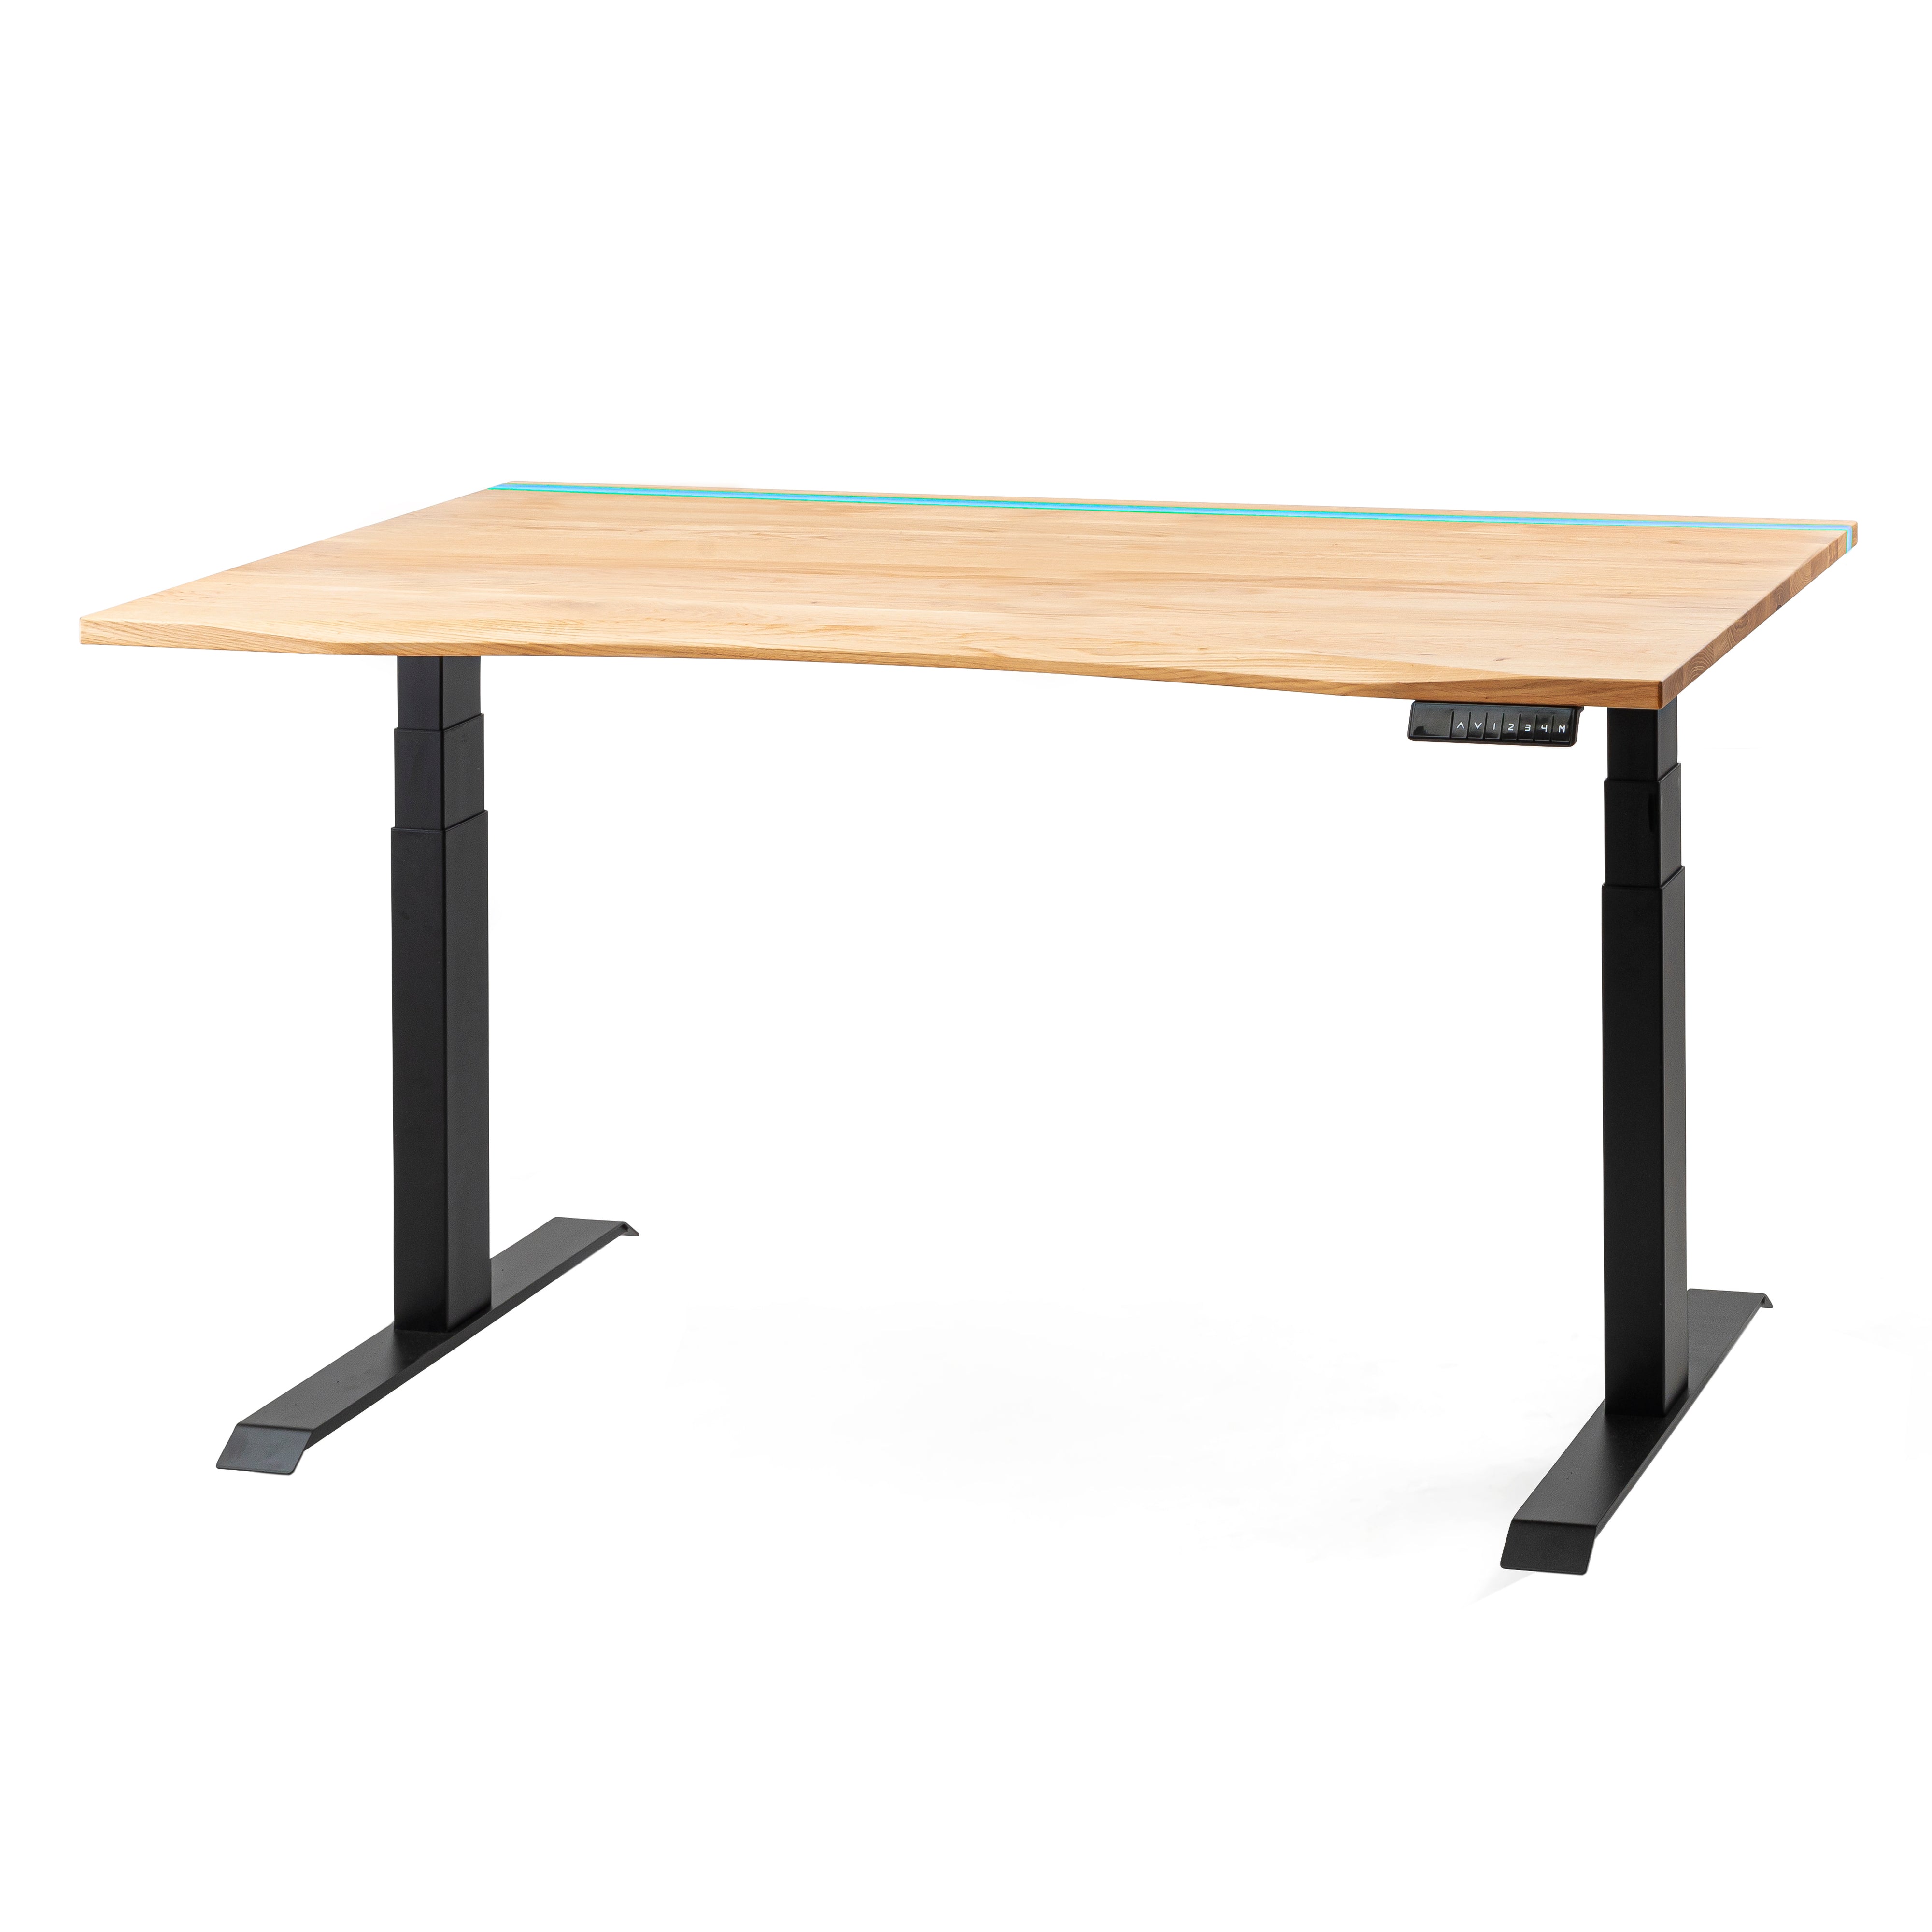 Podizni epoxy hrastov stol s LED svjetlom.